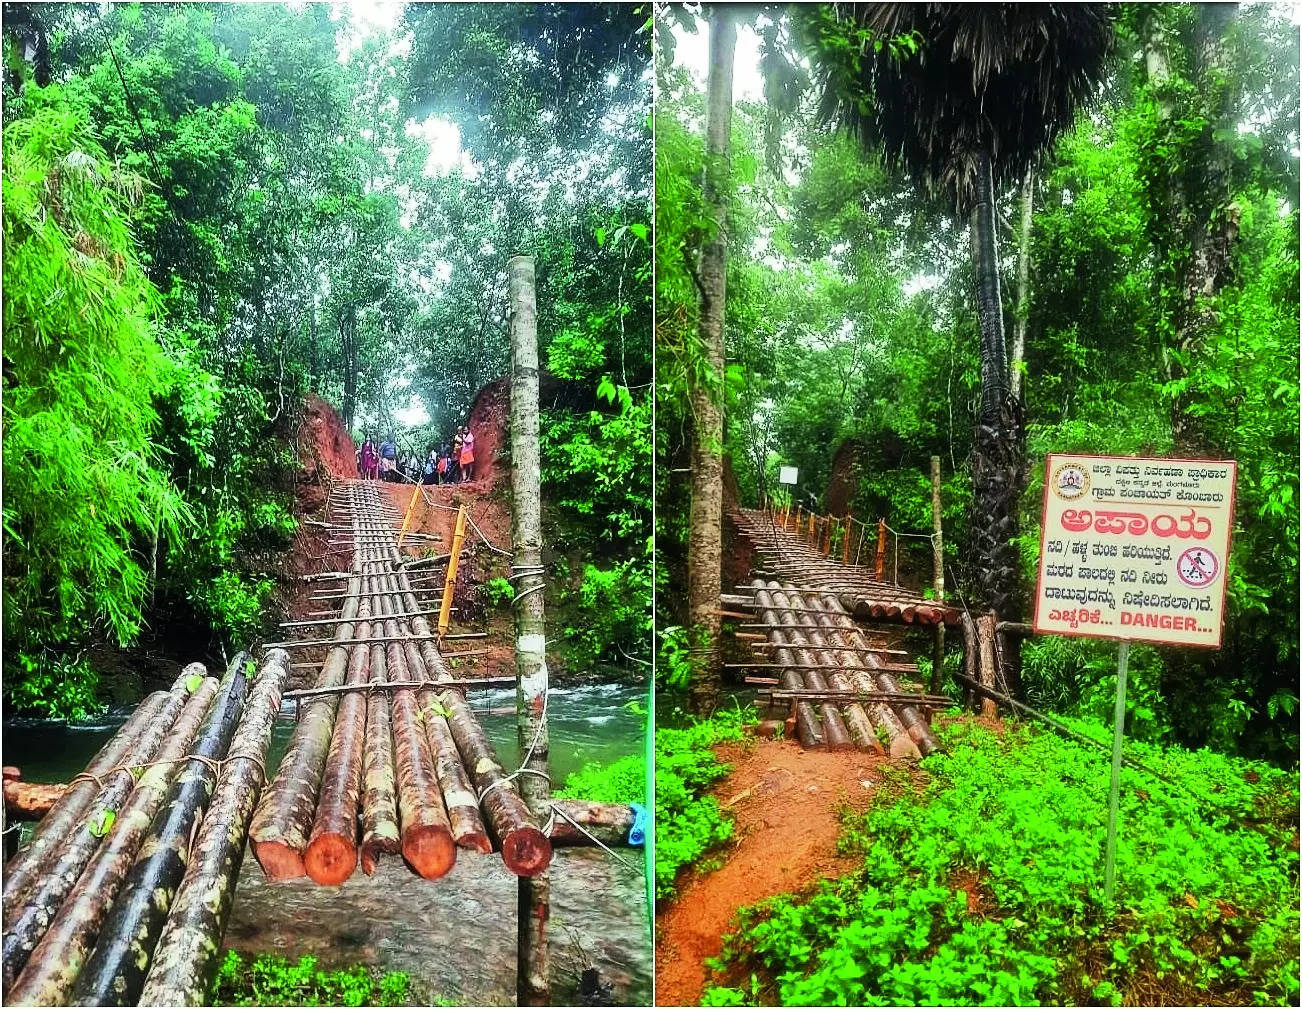 Kids take perilous, unguarded wood bridges to reach school